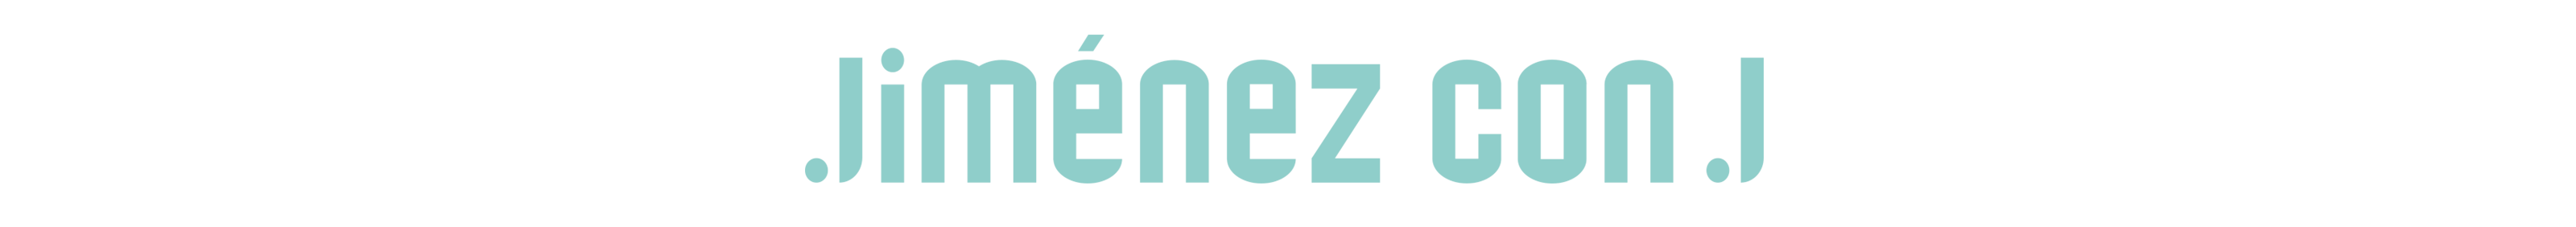 Jimenez conj のプロファイルバナー